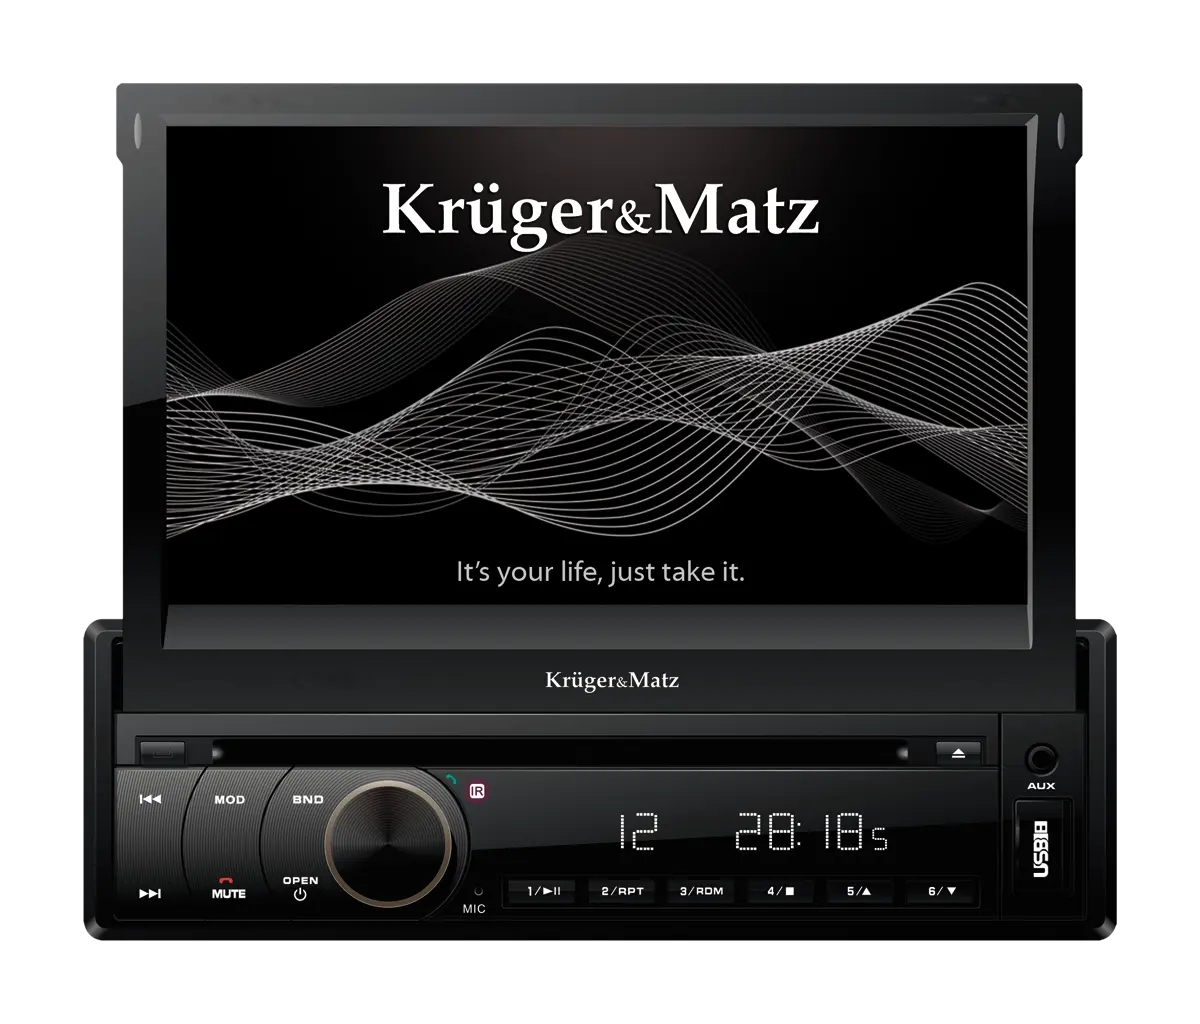 radio samochodowe kruger matz - Co to za firma Kruger&Matz